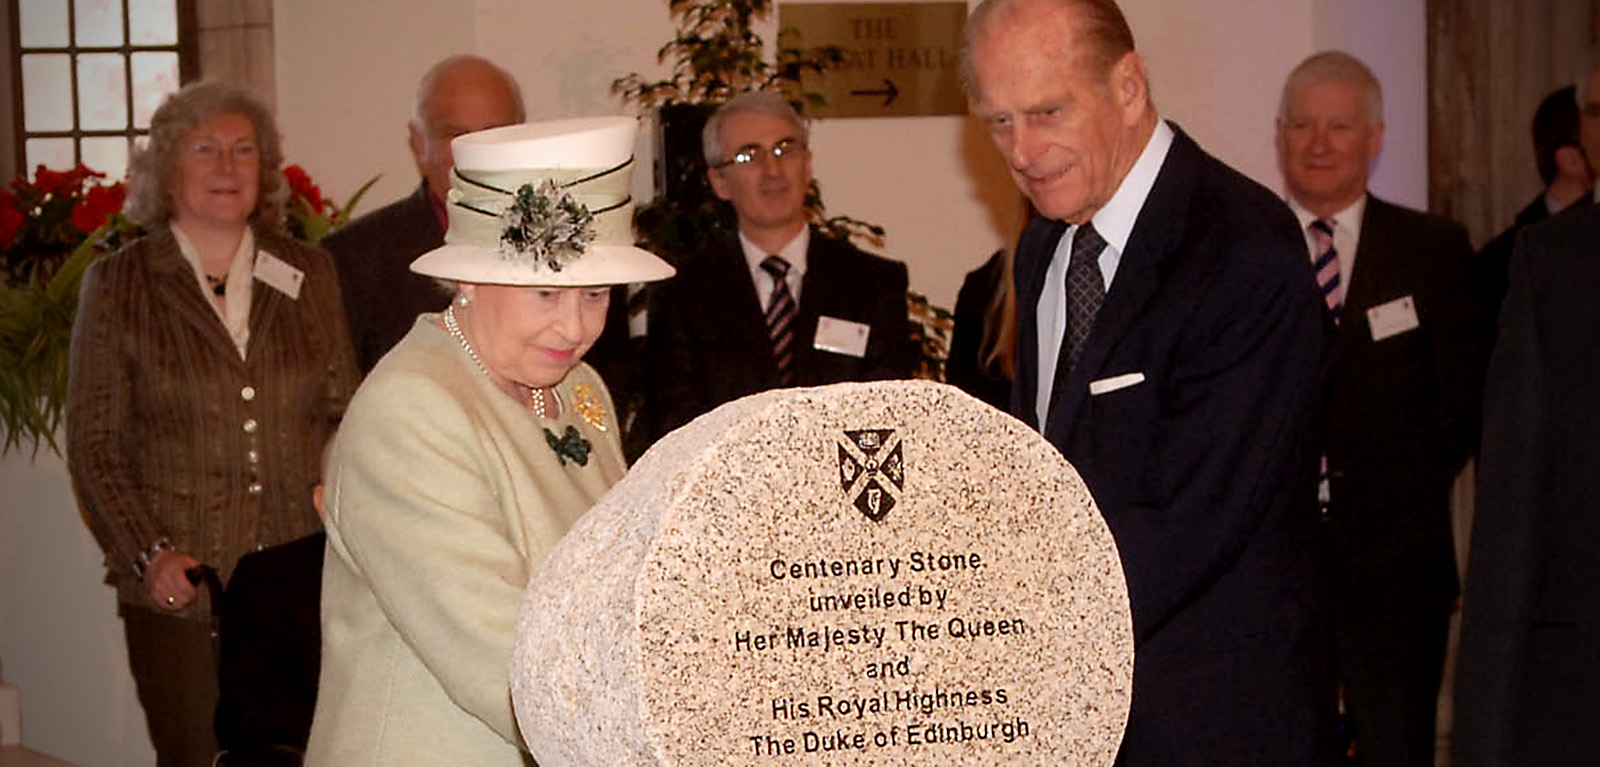 Duke of Edinburgh, Centenary stone